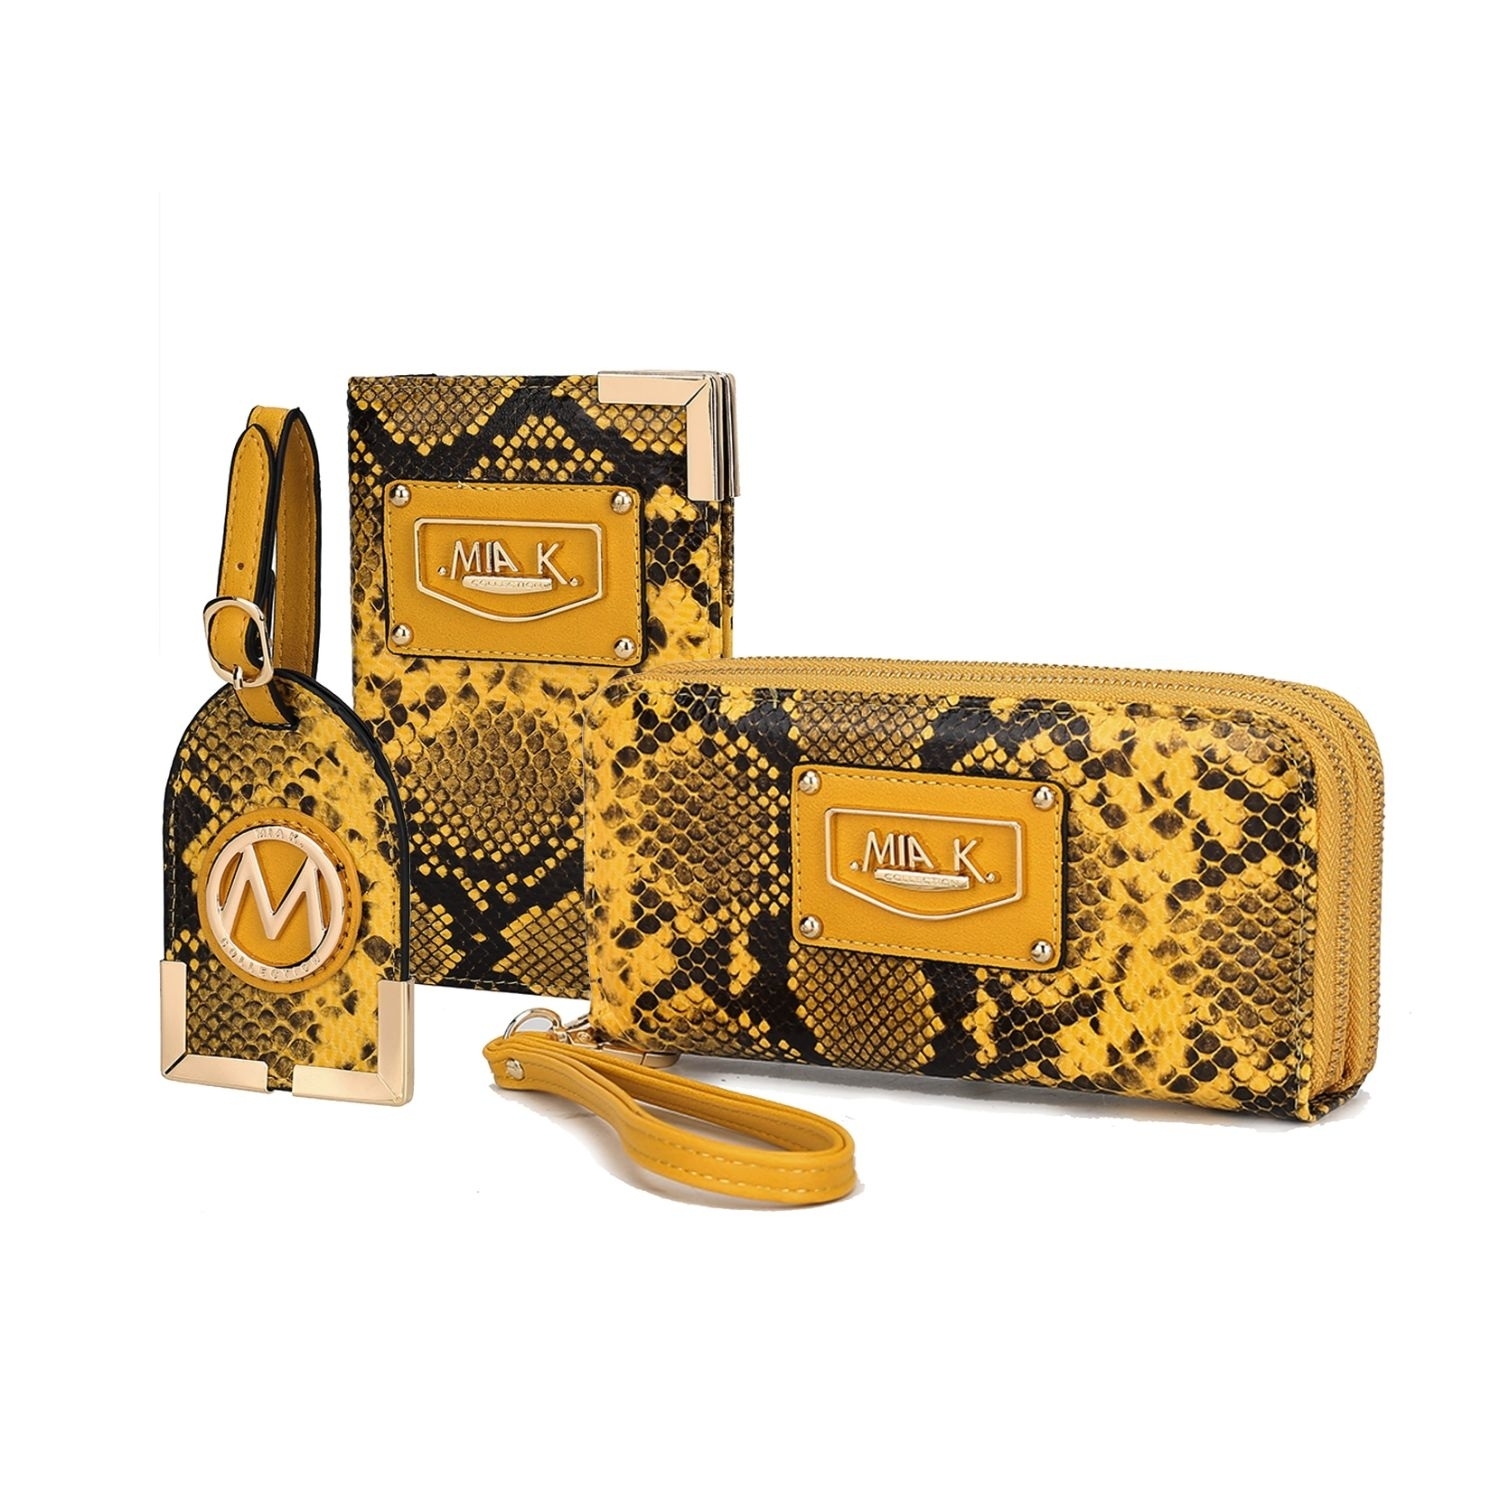 MKF Collection Darla Snake Travel Gift Set Handbag By Mia K 3 Pieces - Mustard